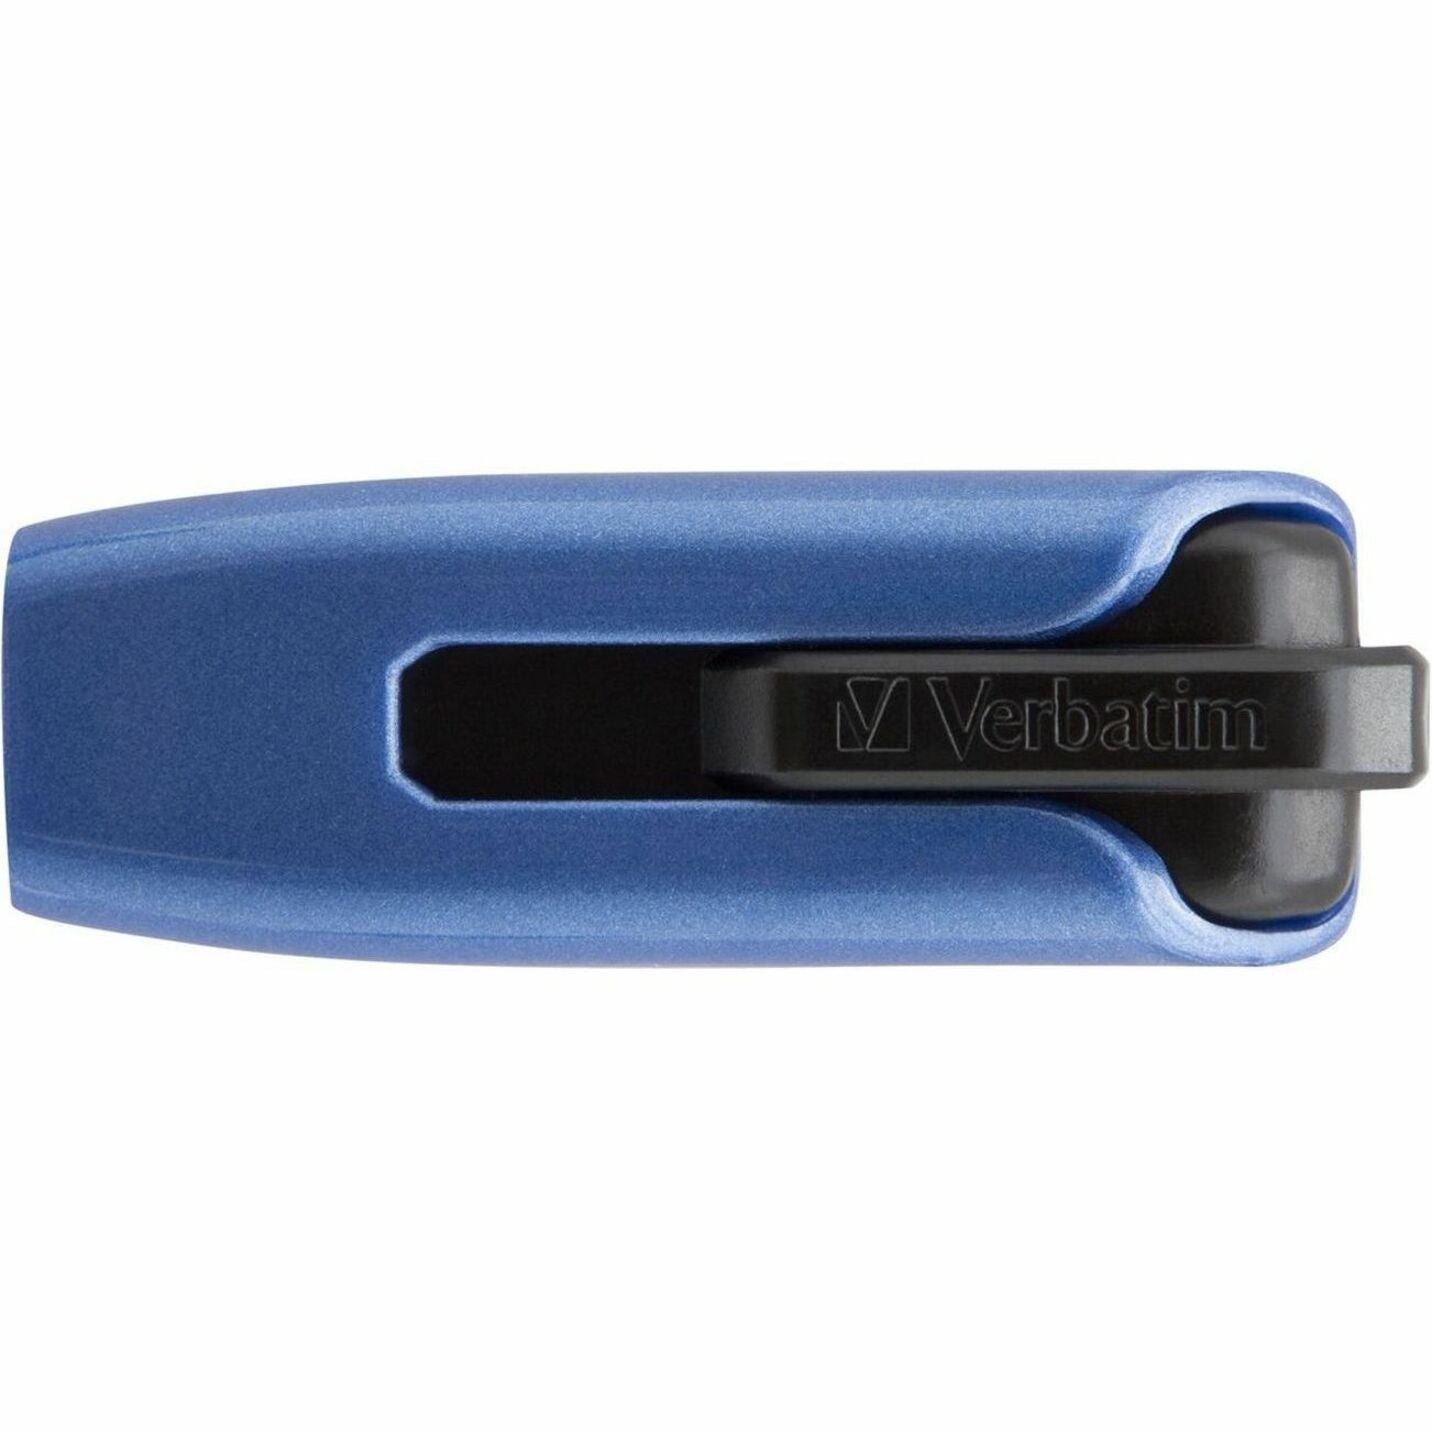 Verbatim 49807 Store 'n' Go V3 Max USB 3.0 Flash Drive - Blue, 64GB Storage